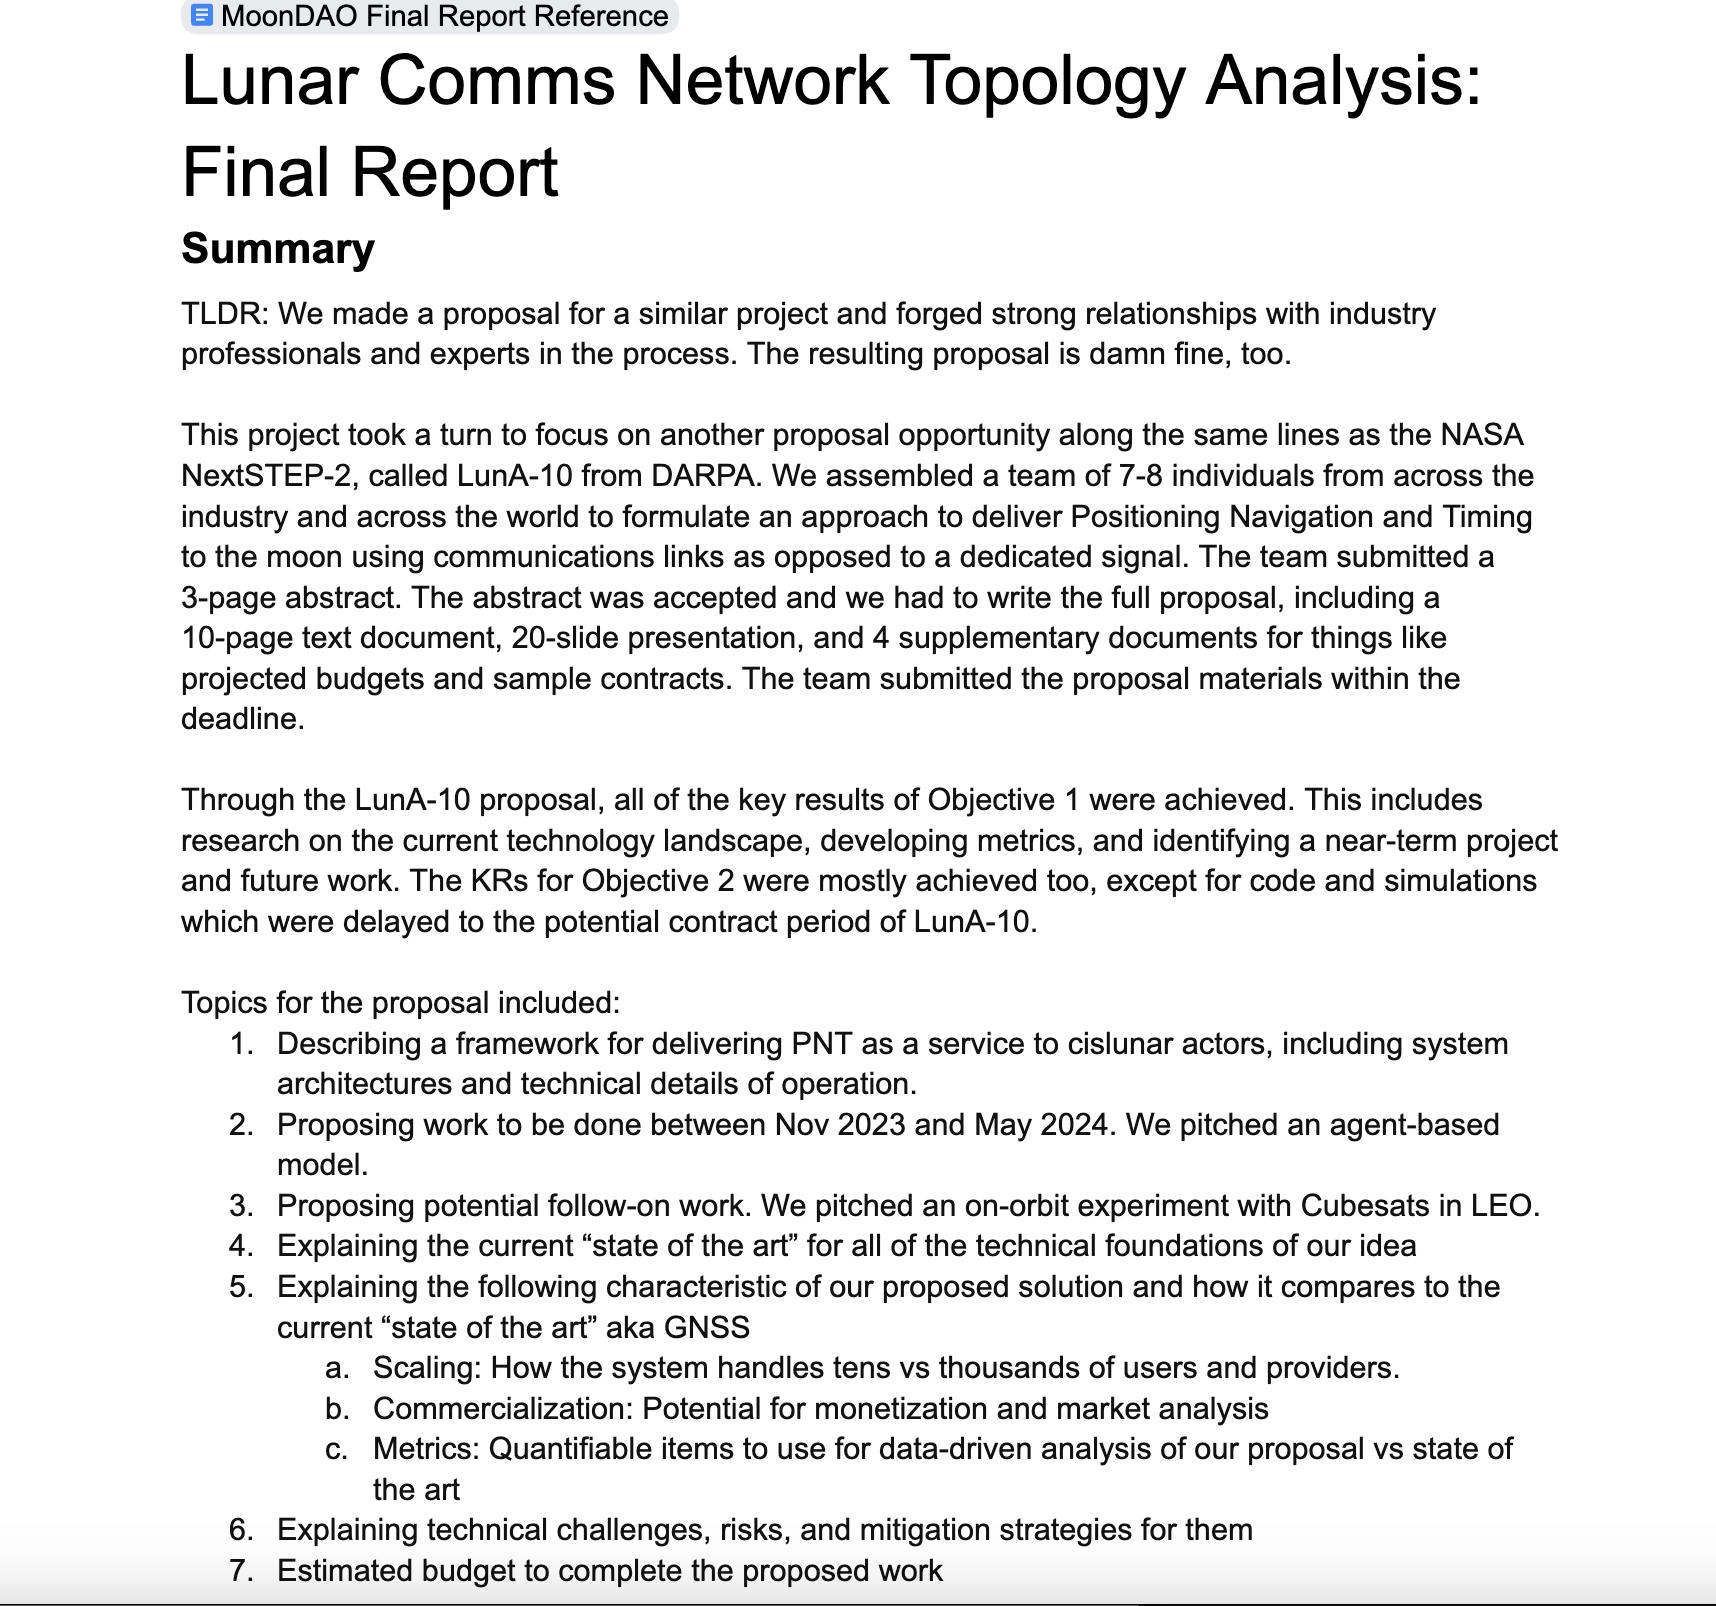 MoonDAO report on lunar comms network topology